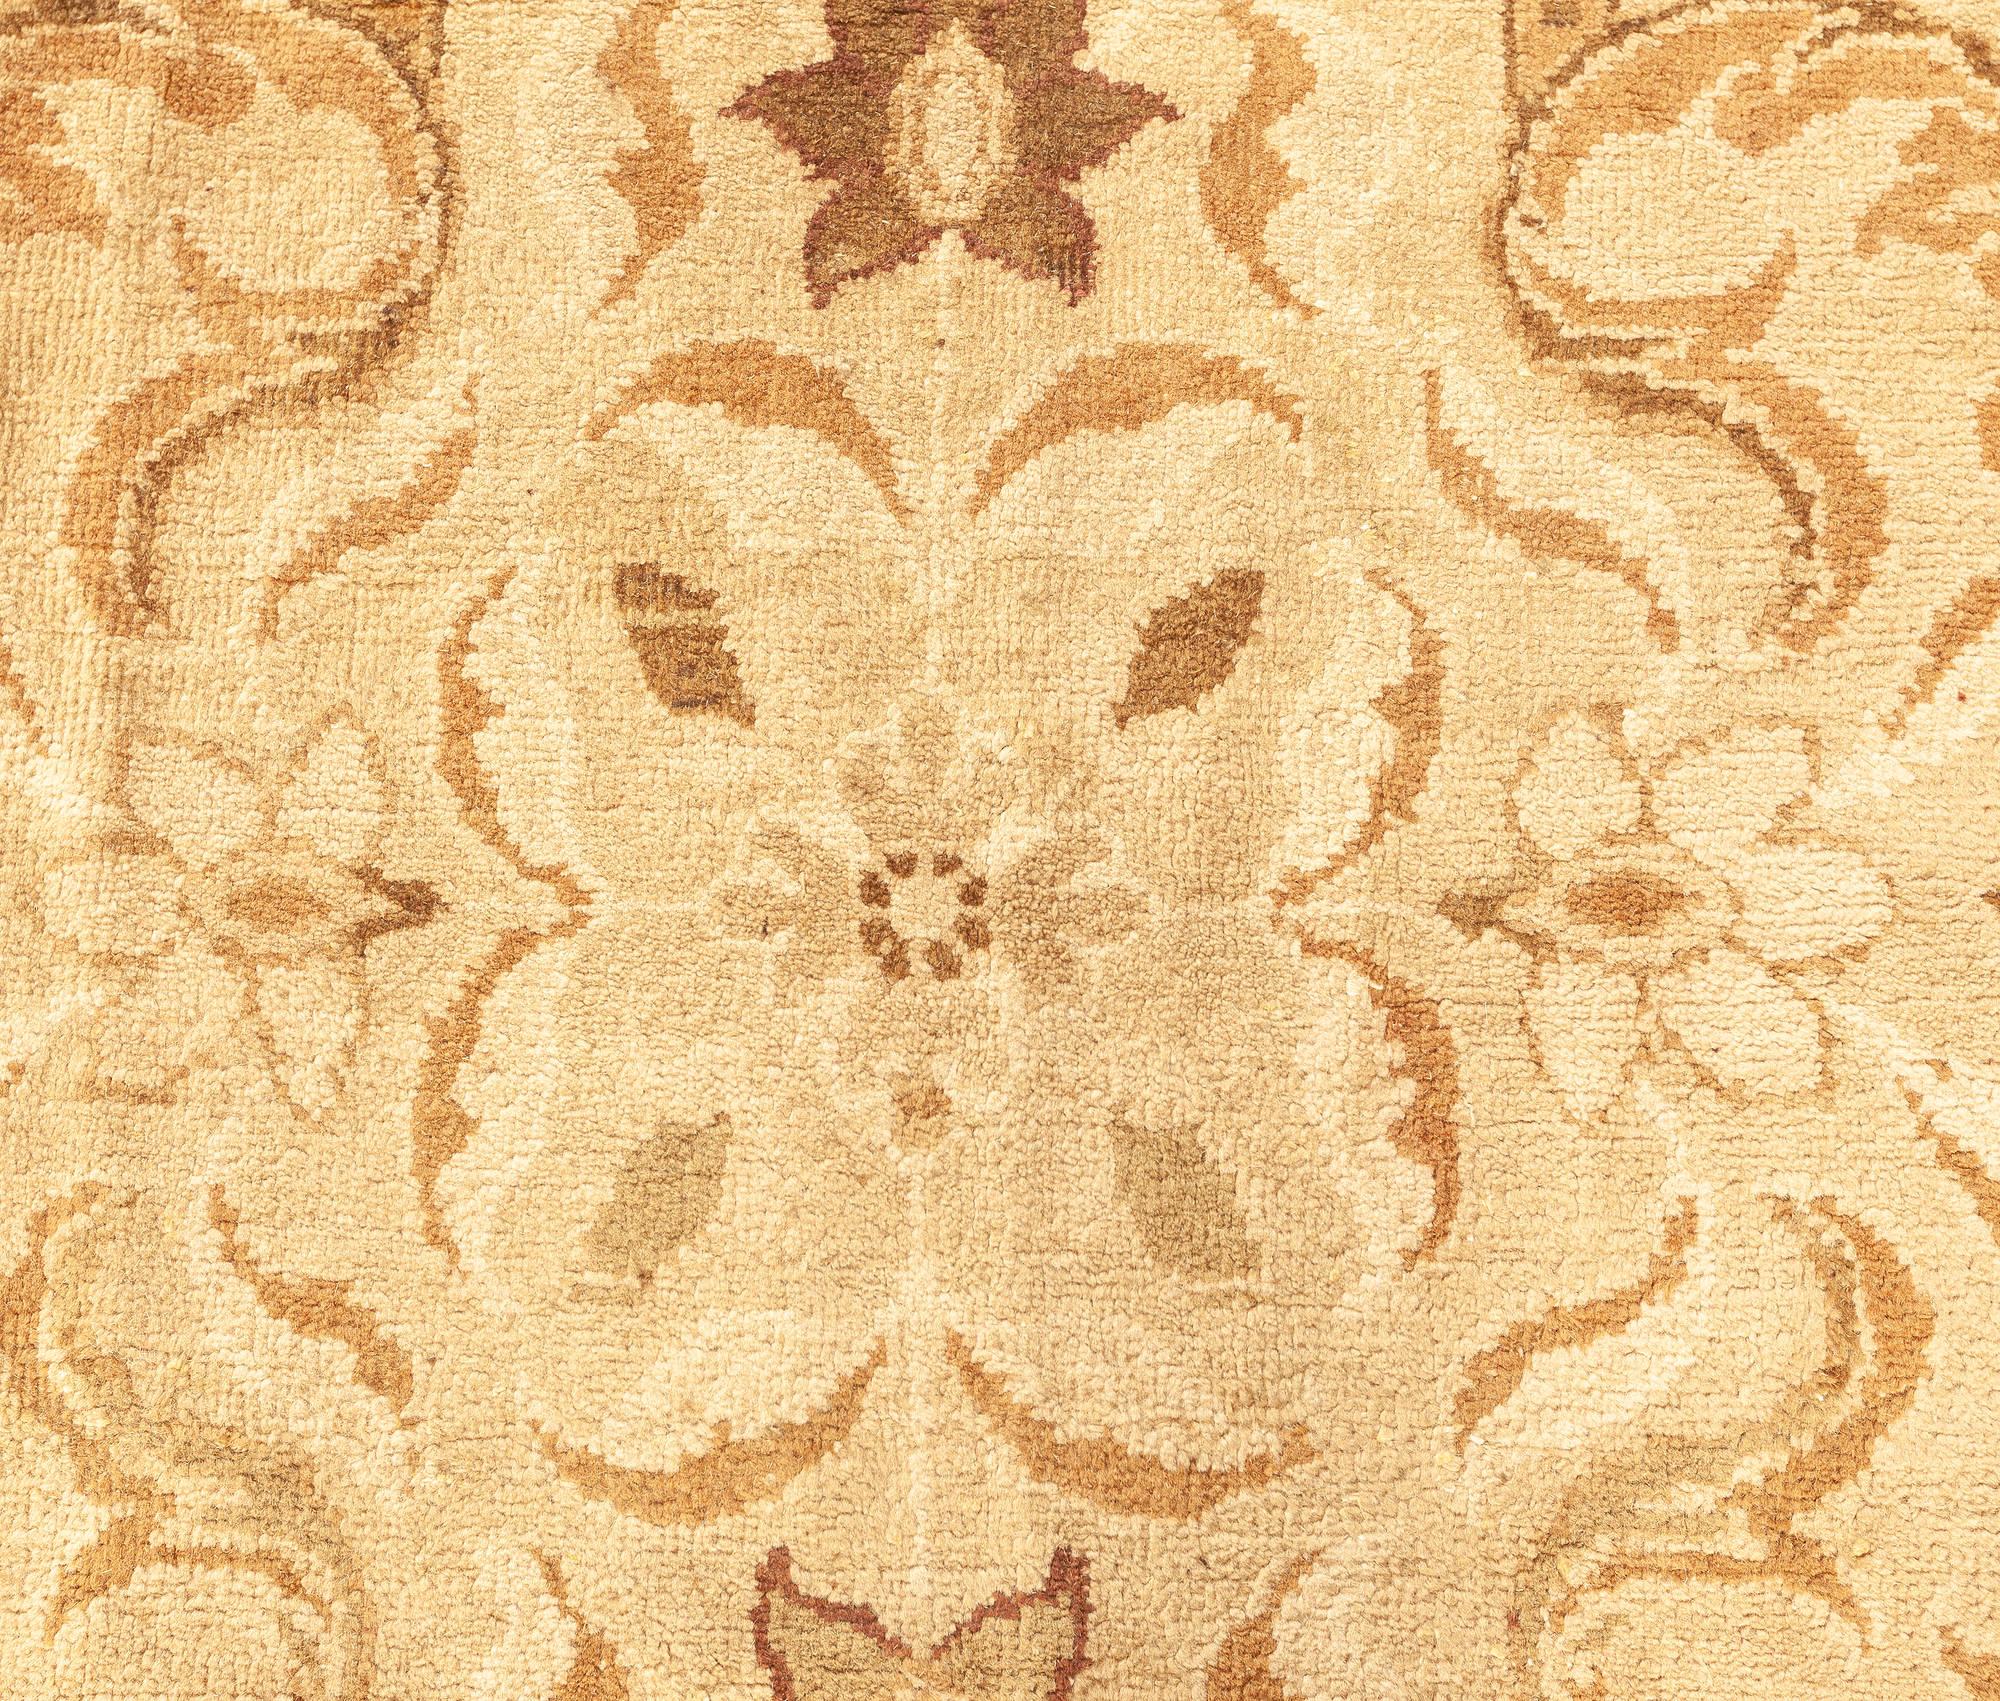 Antique Indian Amritsar Botanic Brown and Beige Handmade Wool Carpet
Size: 8'10